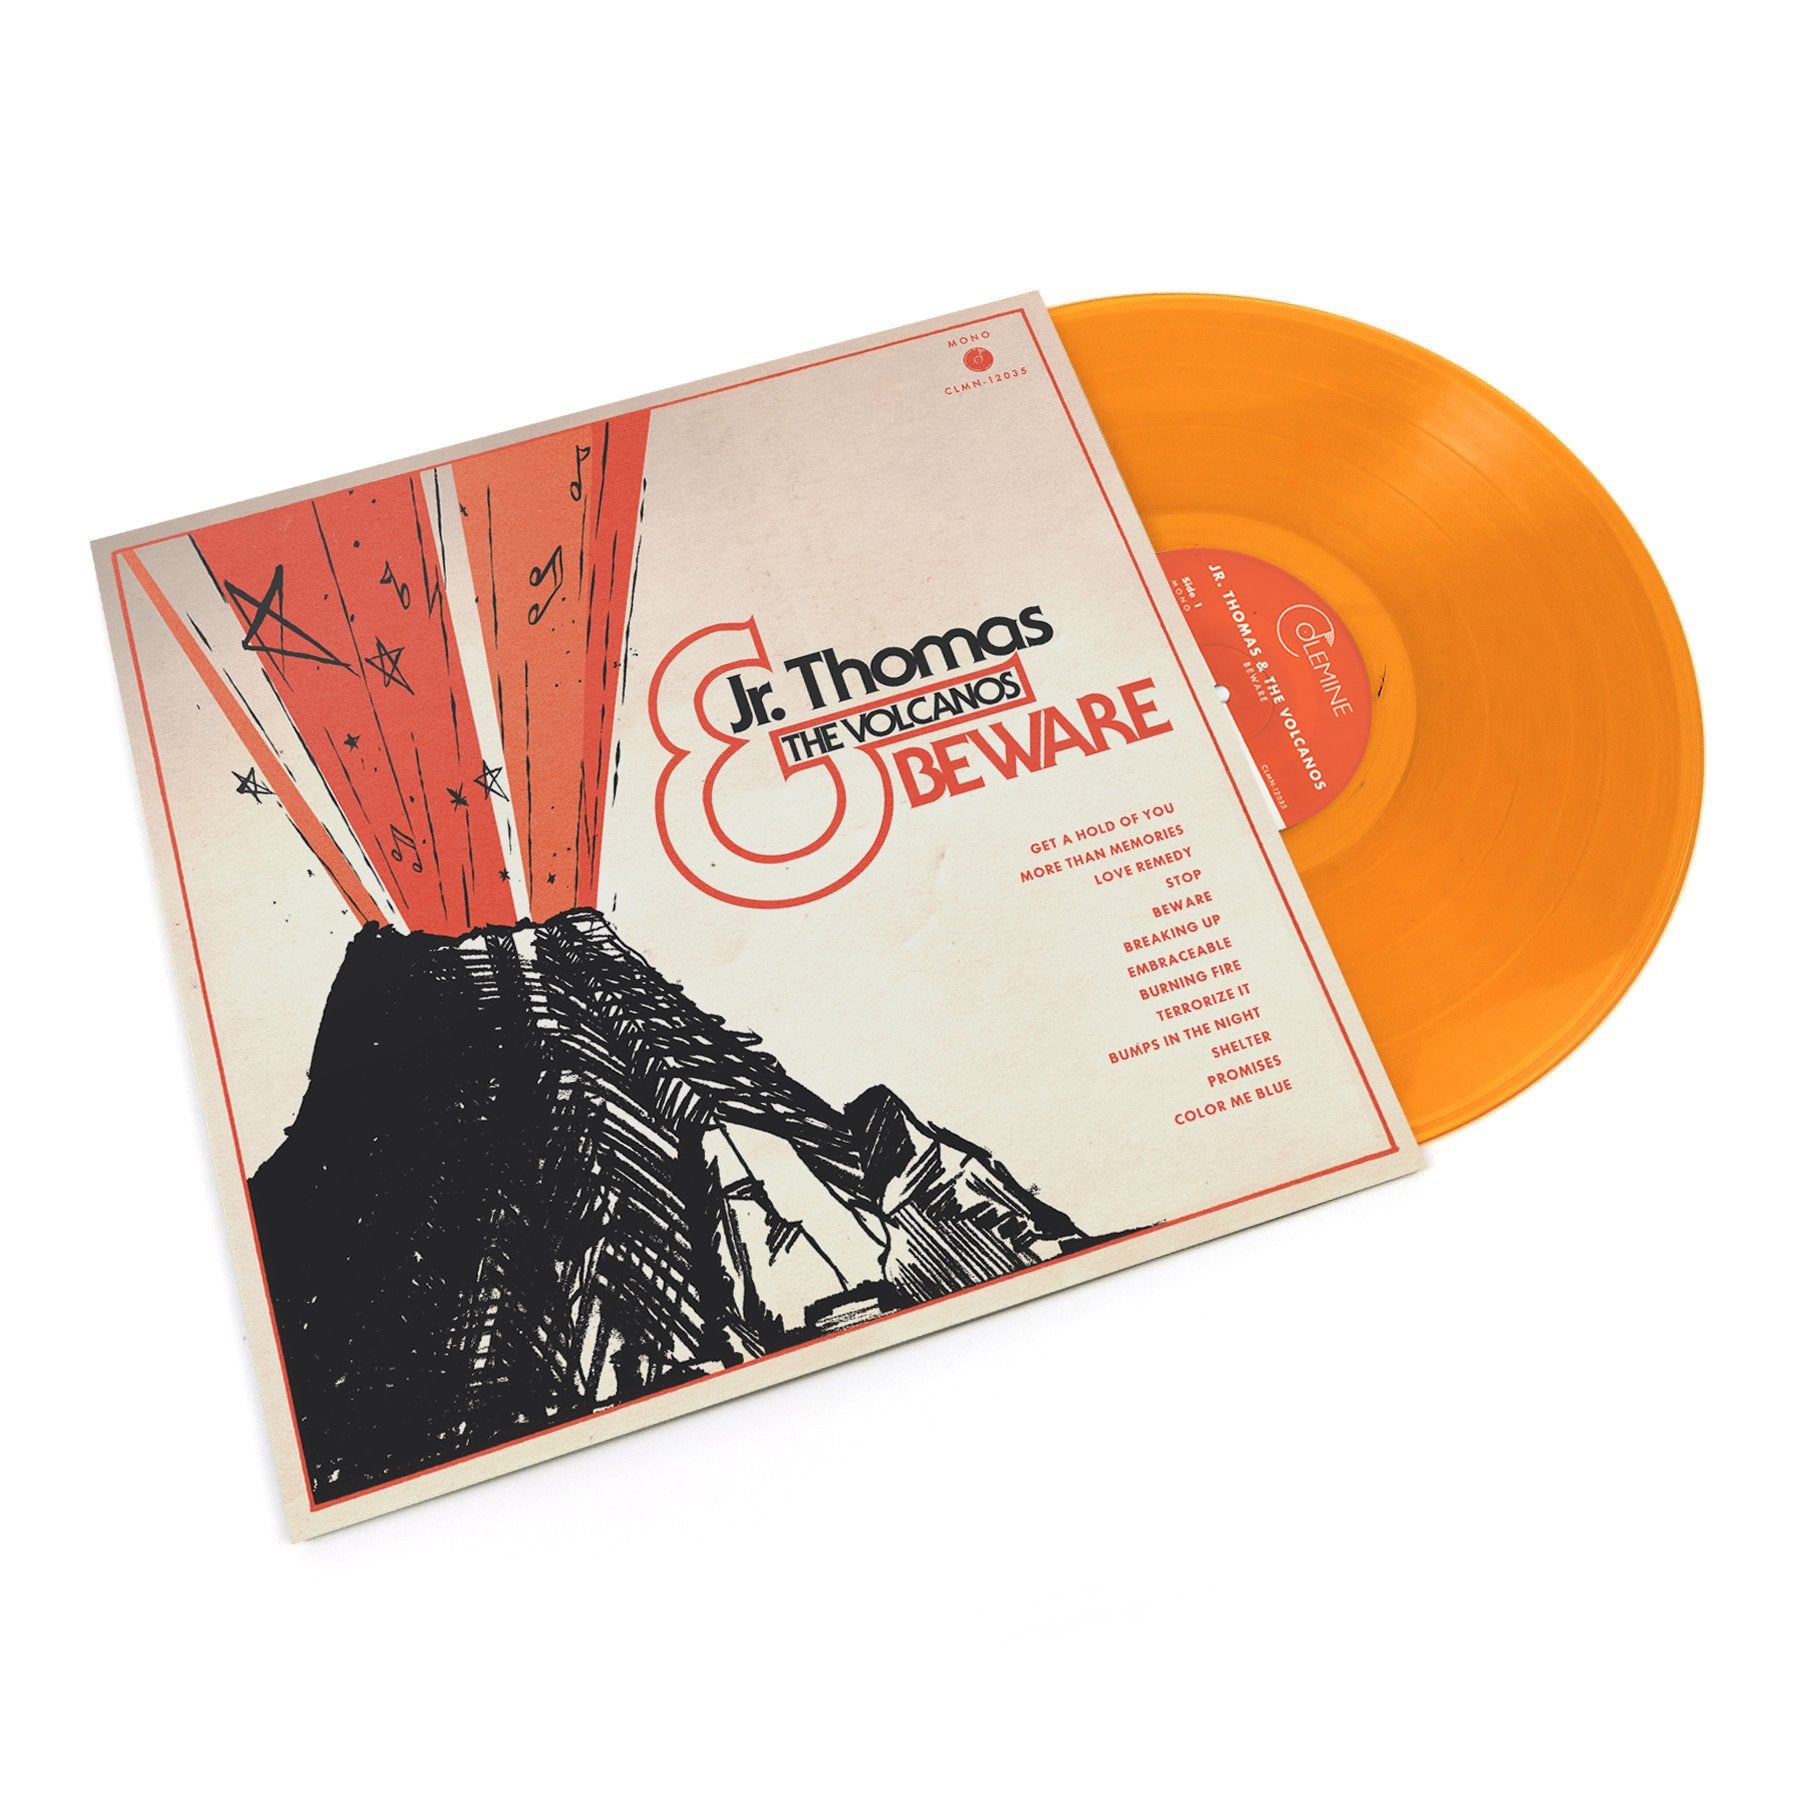 Jr. Thomas & The Volcanos - Beware [Orange Vinyl]